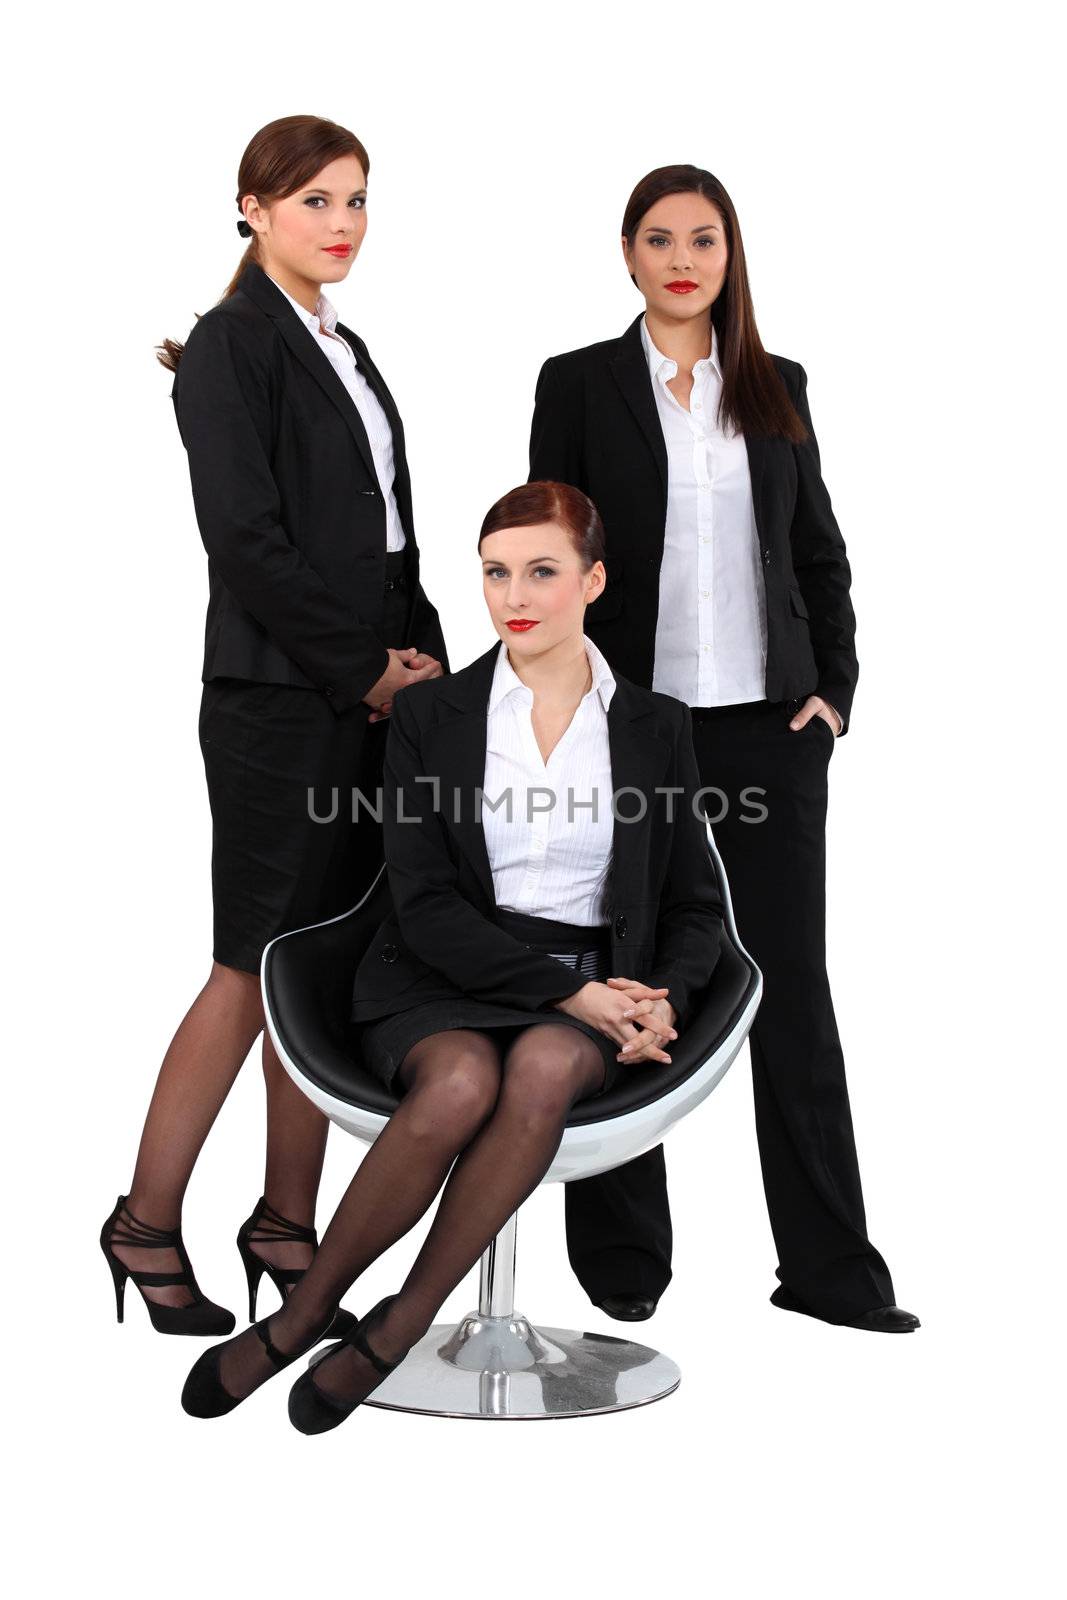 three elegant women in suits by phovoir